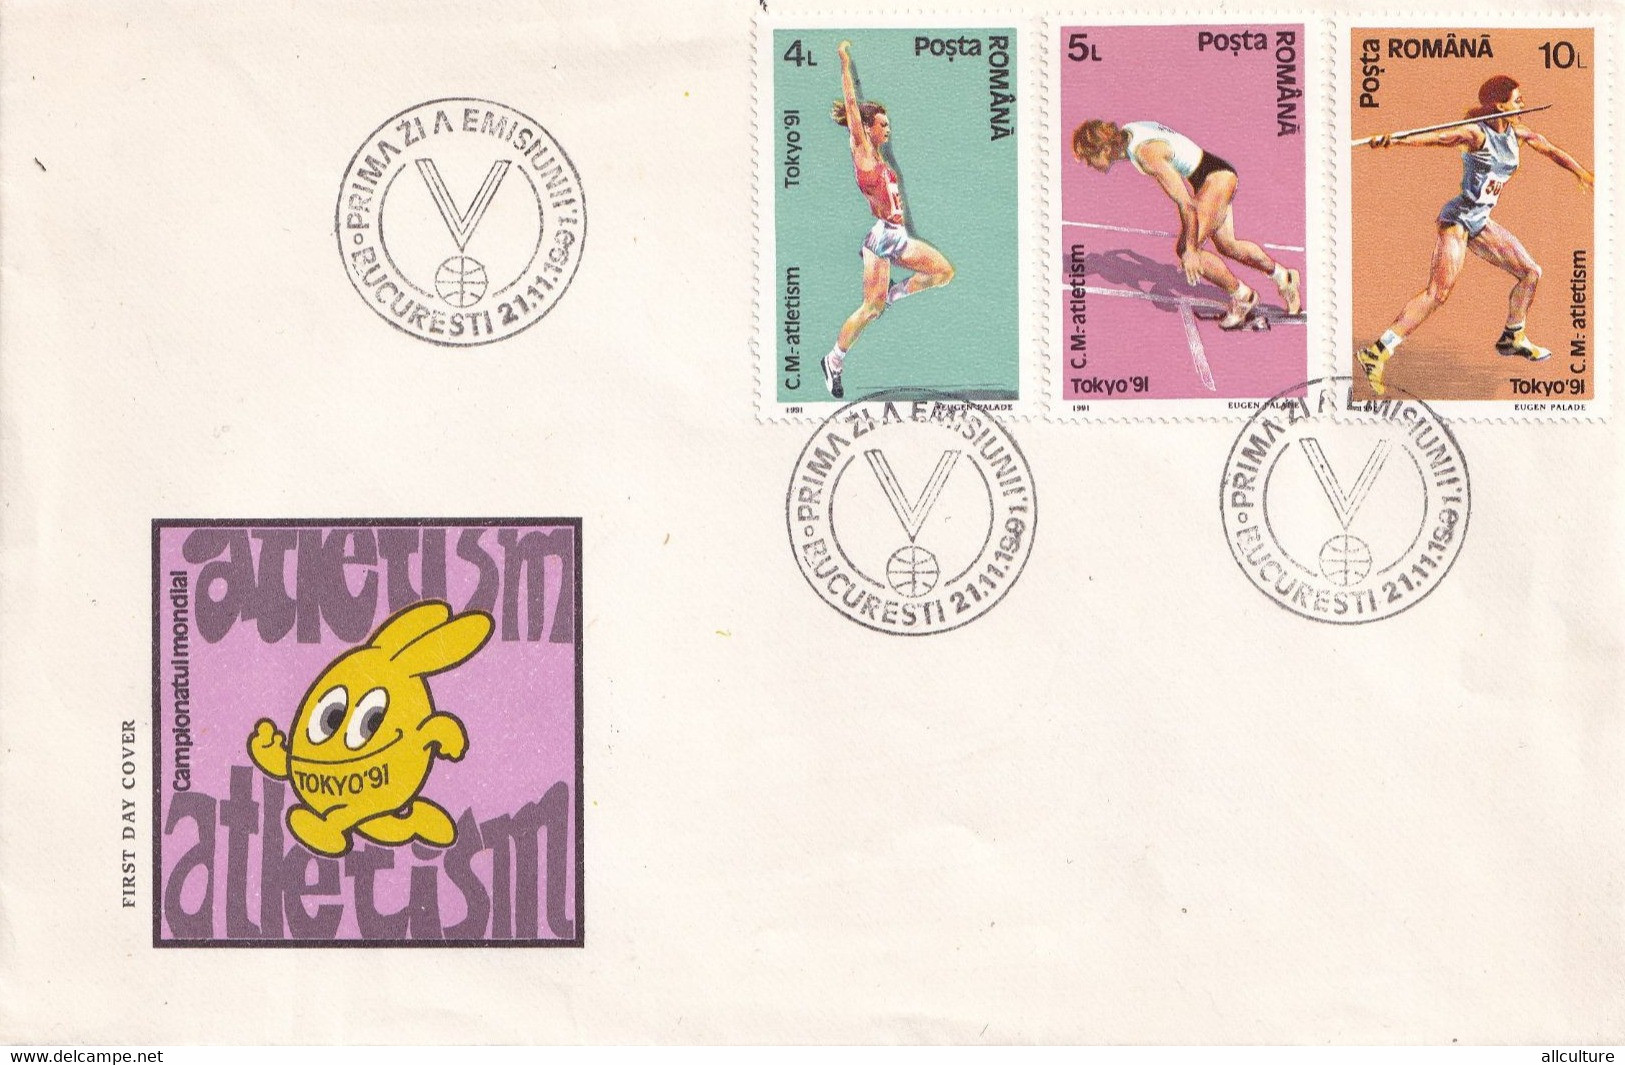 A2858 - Campionatul Mondial Atletism, Bucuresti 1991, Romania 2 Covers  FDC - FDC